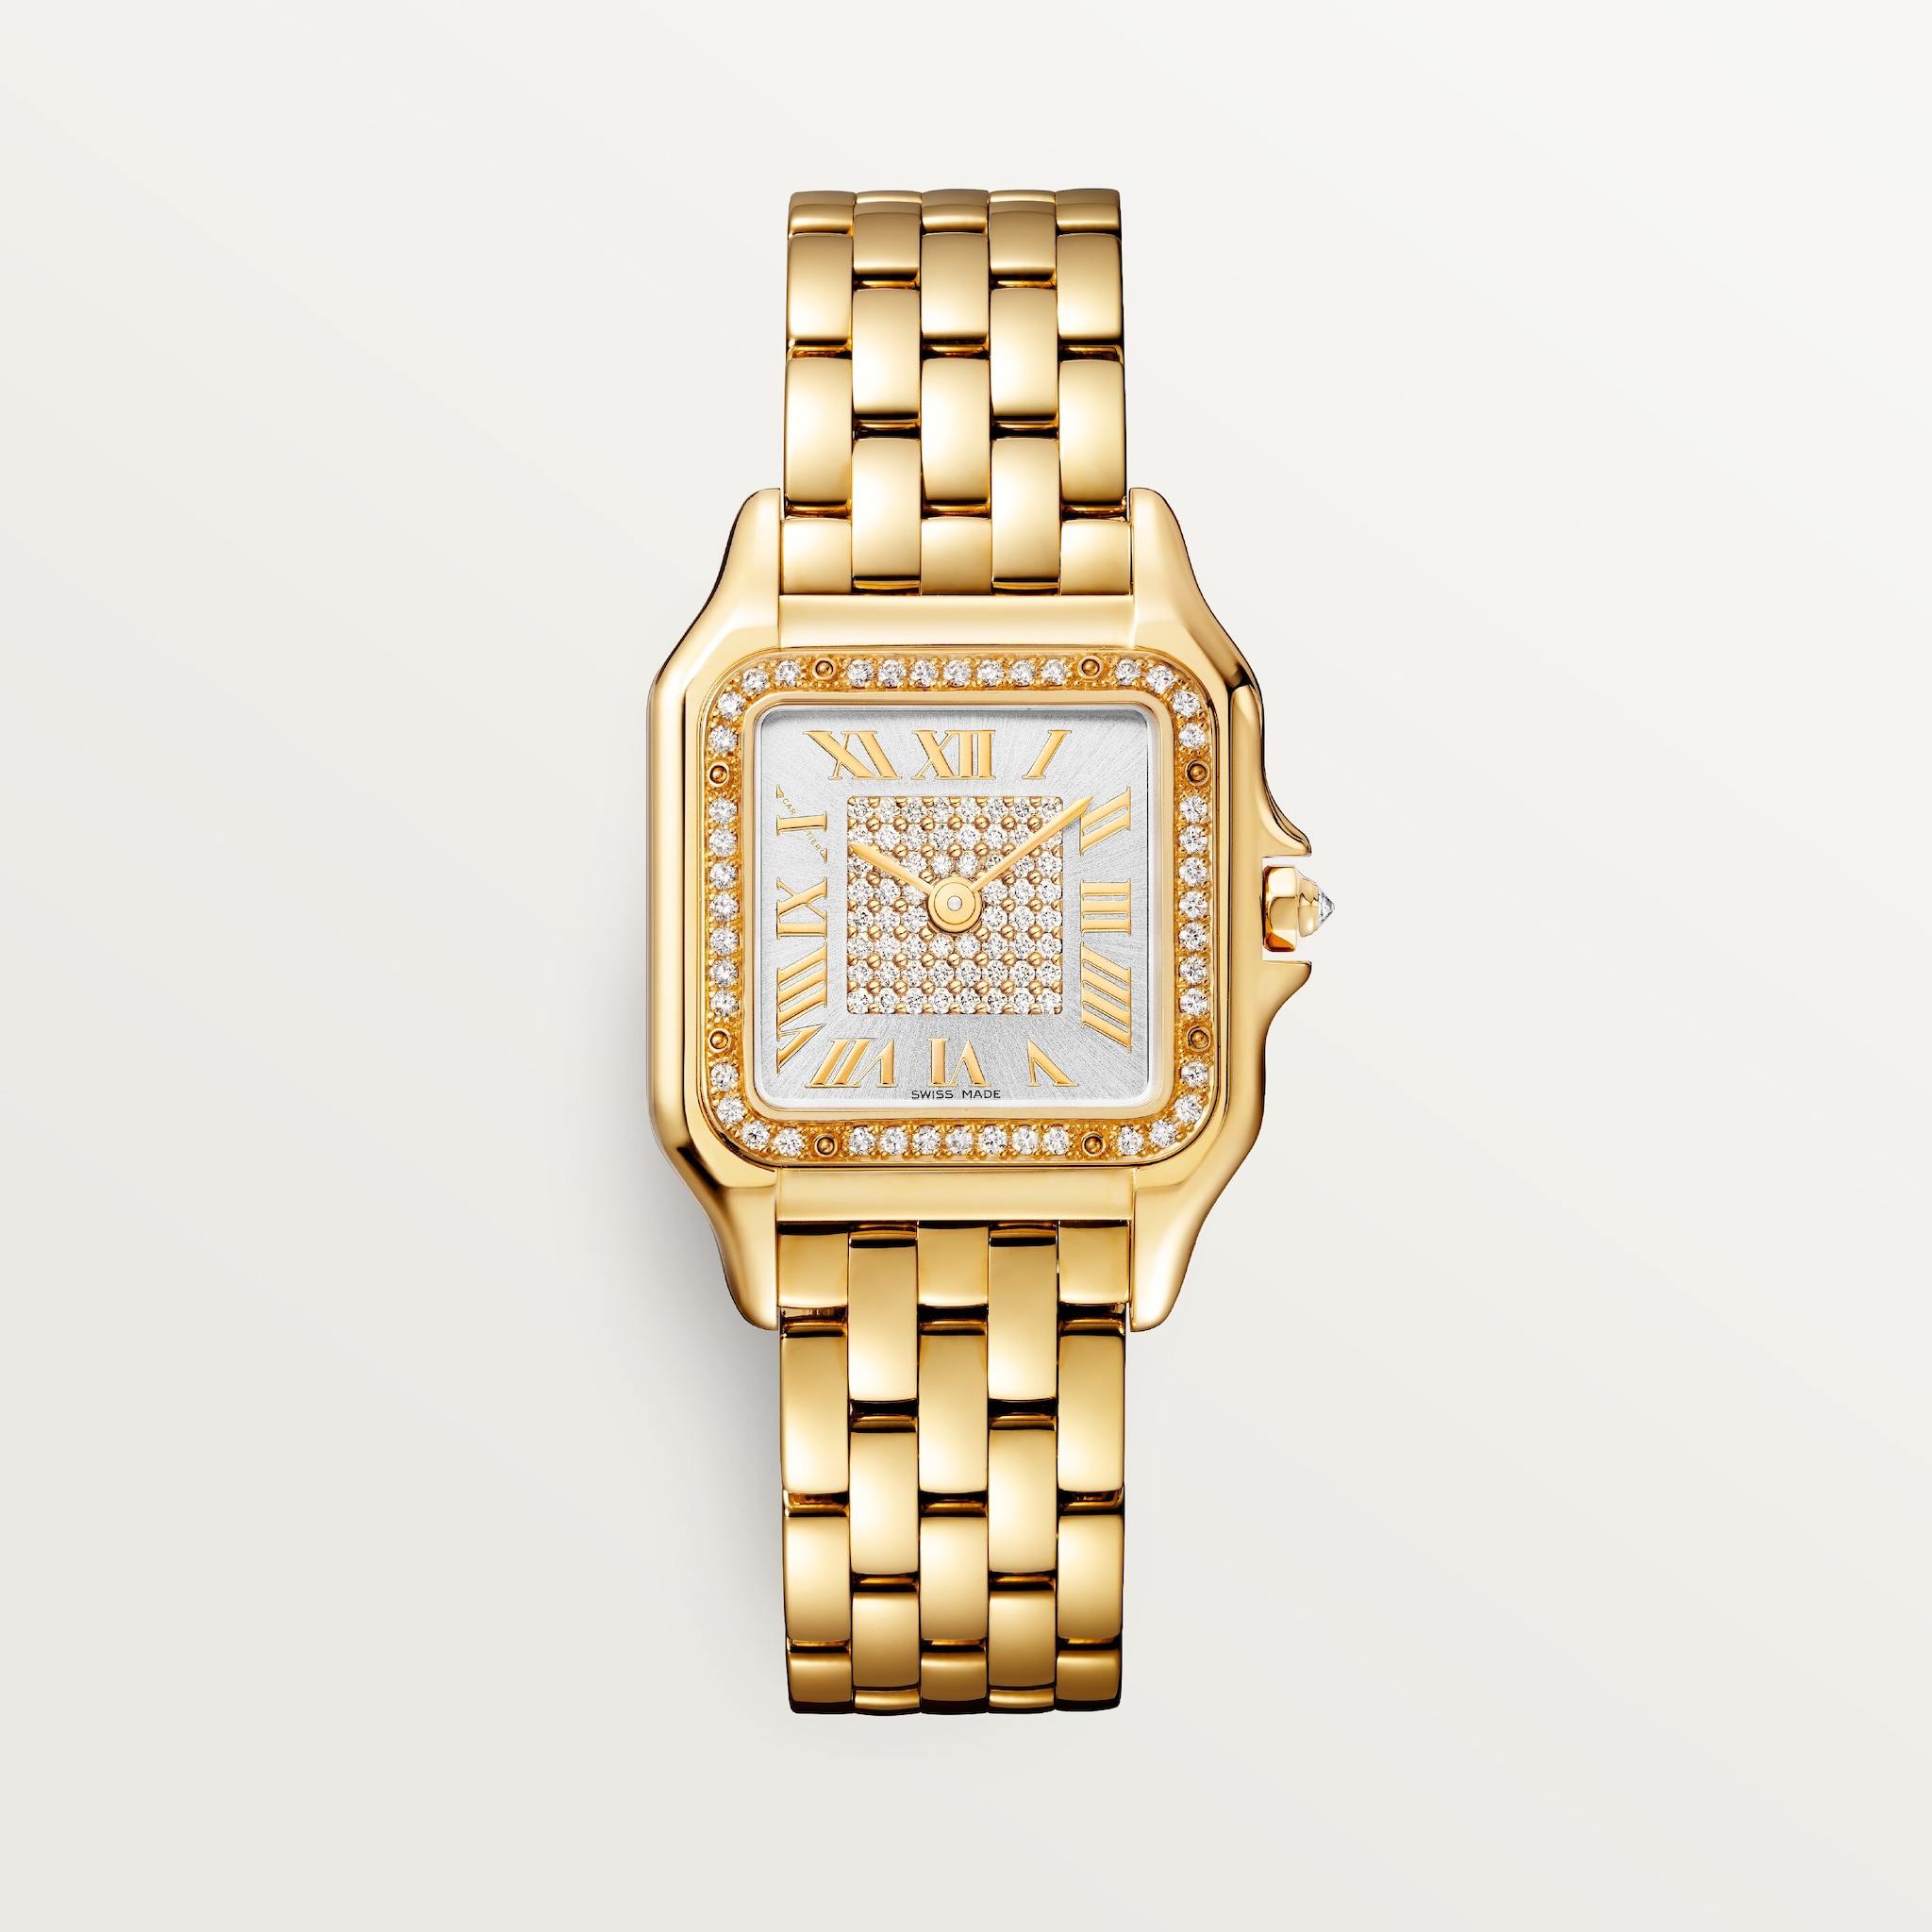 Panthère de Cartier watchMedium model, quartz, yellow gold, diamonds